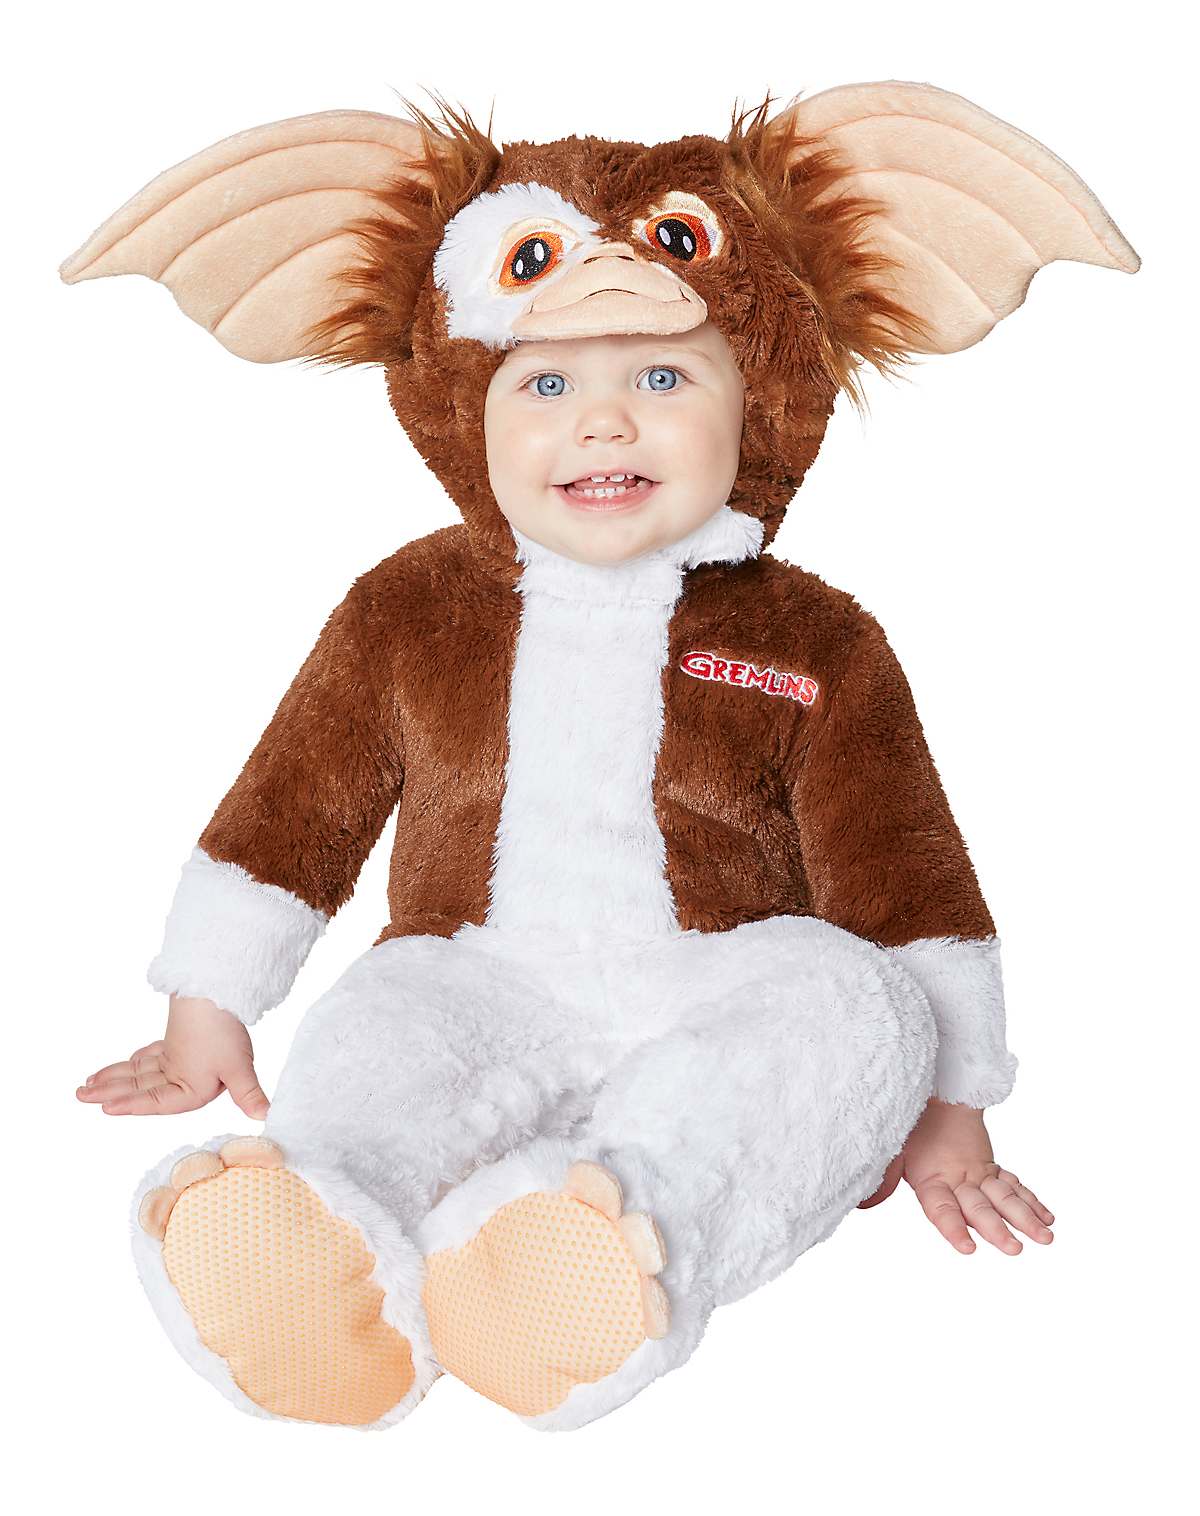 Baby Gizmo Costume - Gremlins